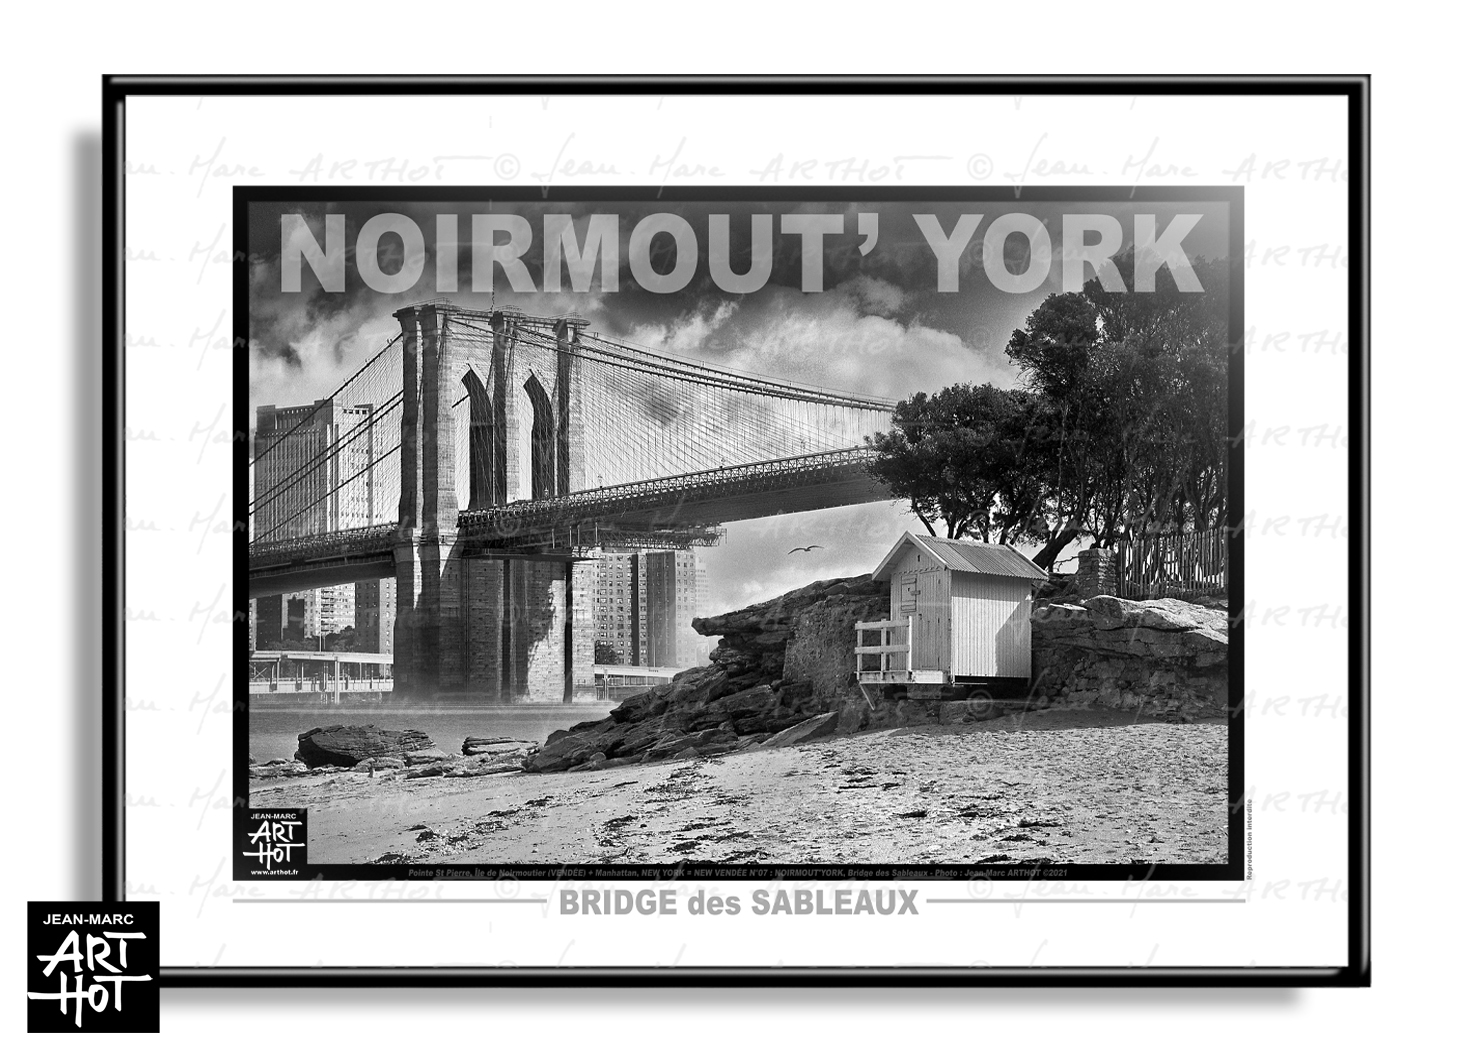 arthot-photo-art-b&amp;w-new-york-vendee-newvendee-007-2-noirmout-york-ile-noirmoutier-plage-dames-cabanes-pont-manhattan-HORIZ-AFFICHE